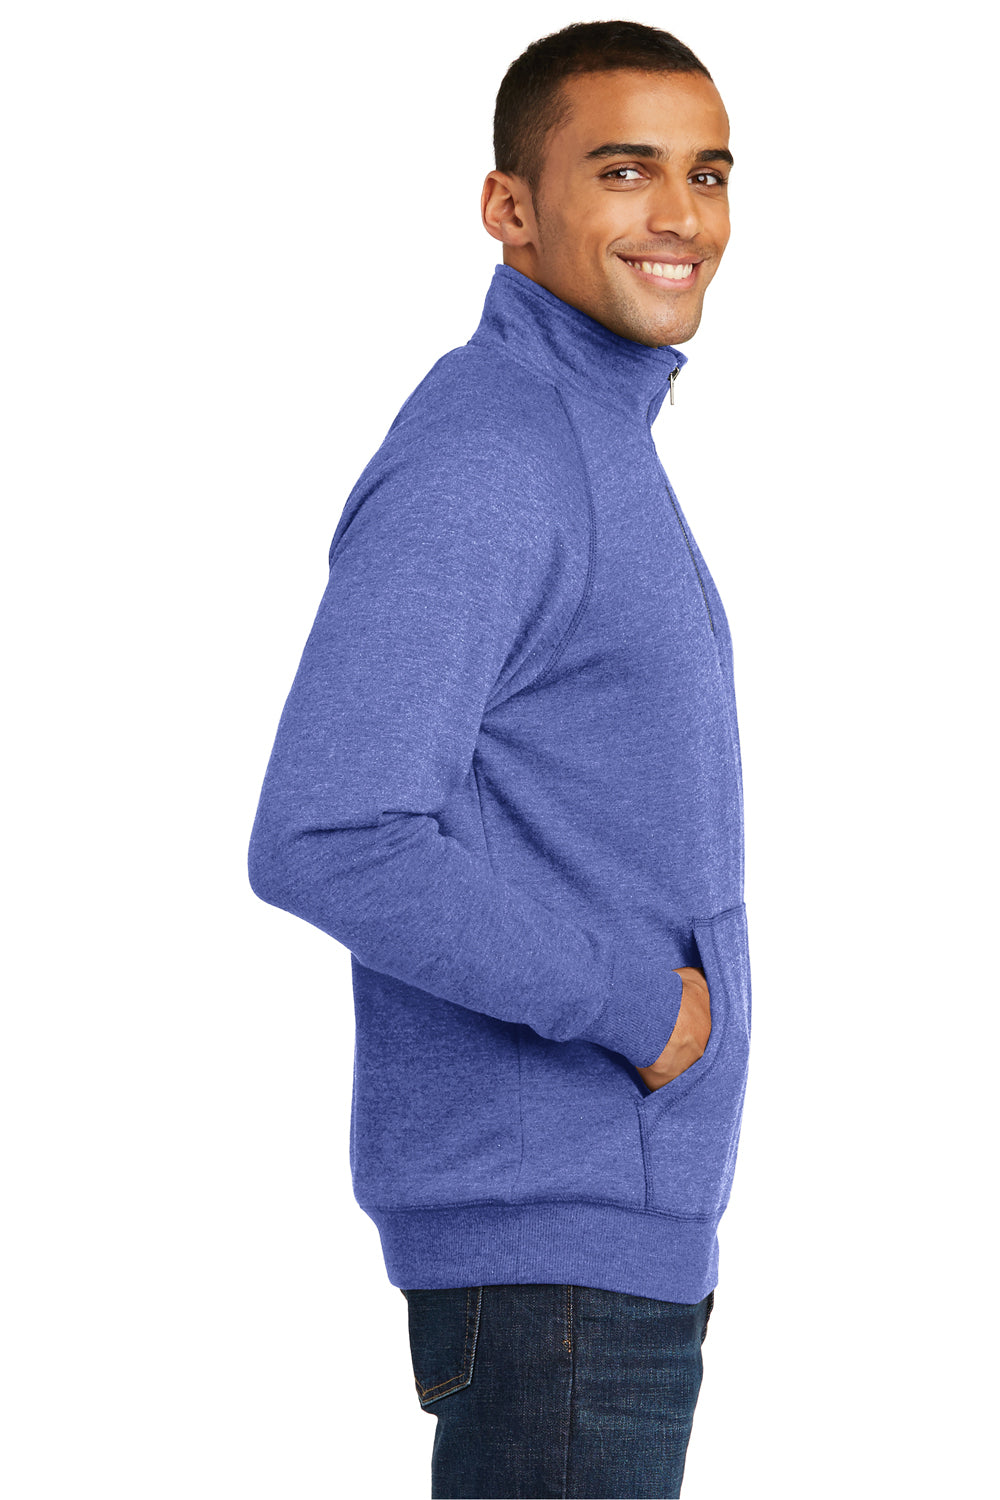 District DM392 Mens Fleece 1/4 Zip Sweatshirt Heather Royal Blue Side